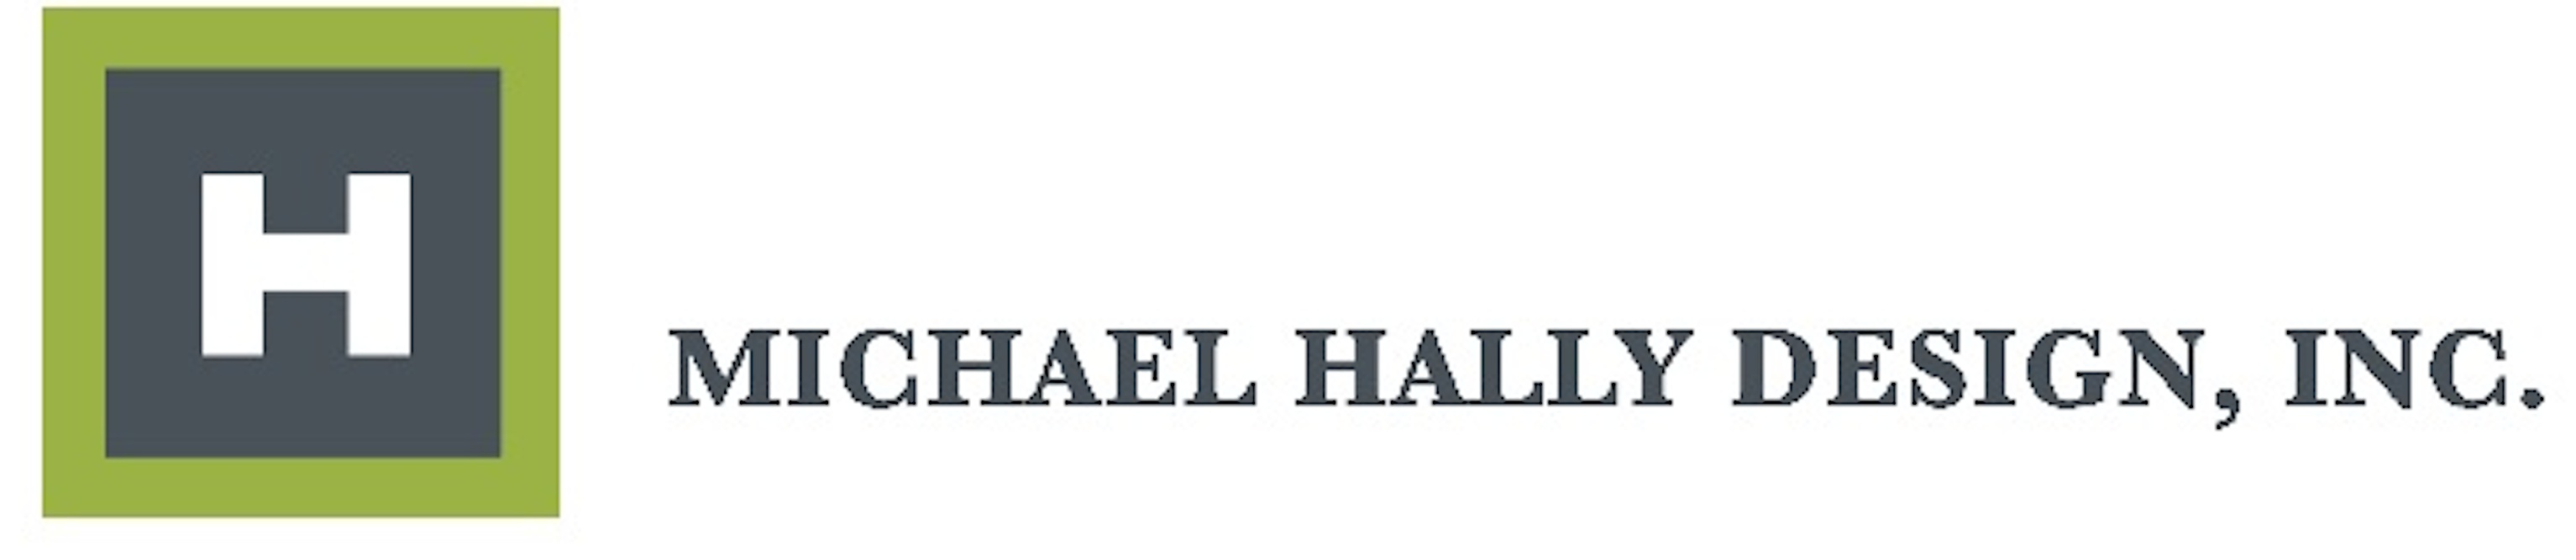 Michael Hally Design, Inc logo